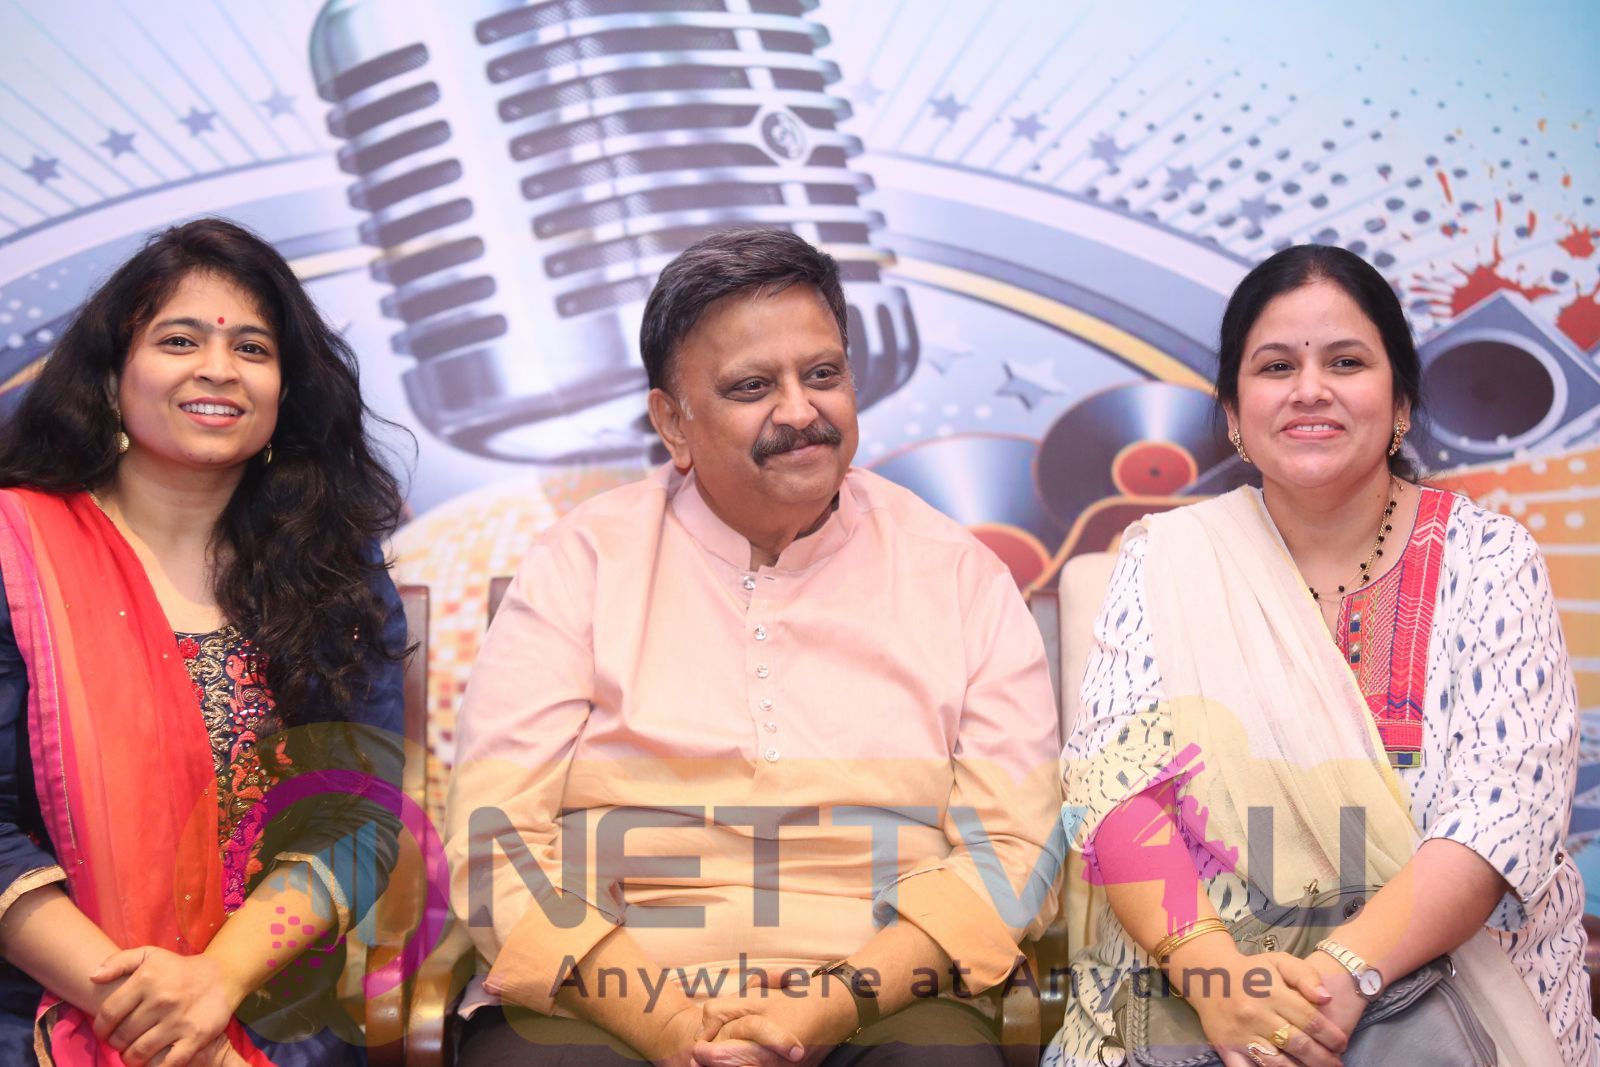 Indian Singers Rights Association Press Meet Photos Telugu Gallery